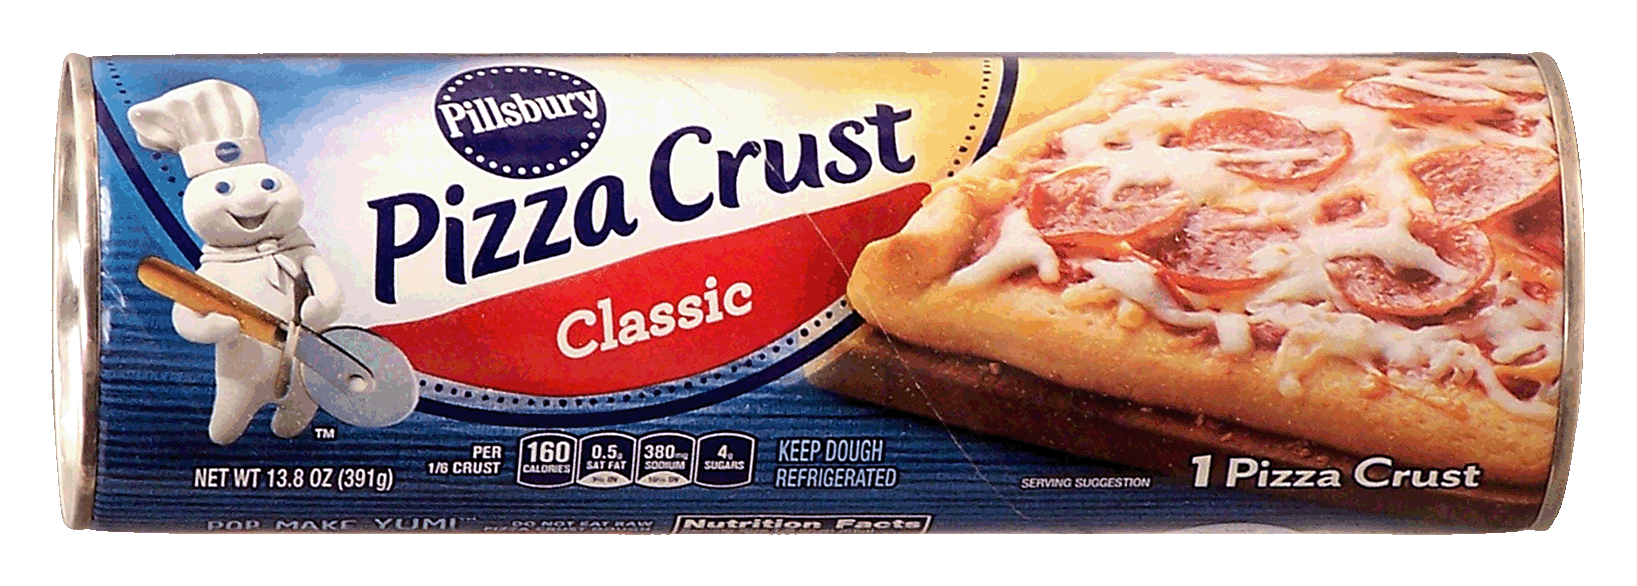 Pillsbury  classic pizza crust dough Full-Size Picture